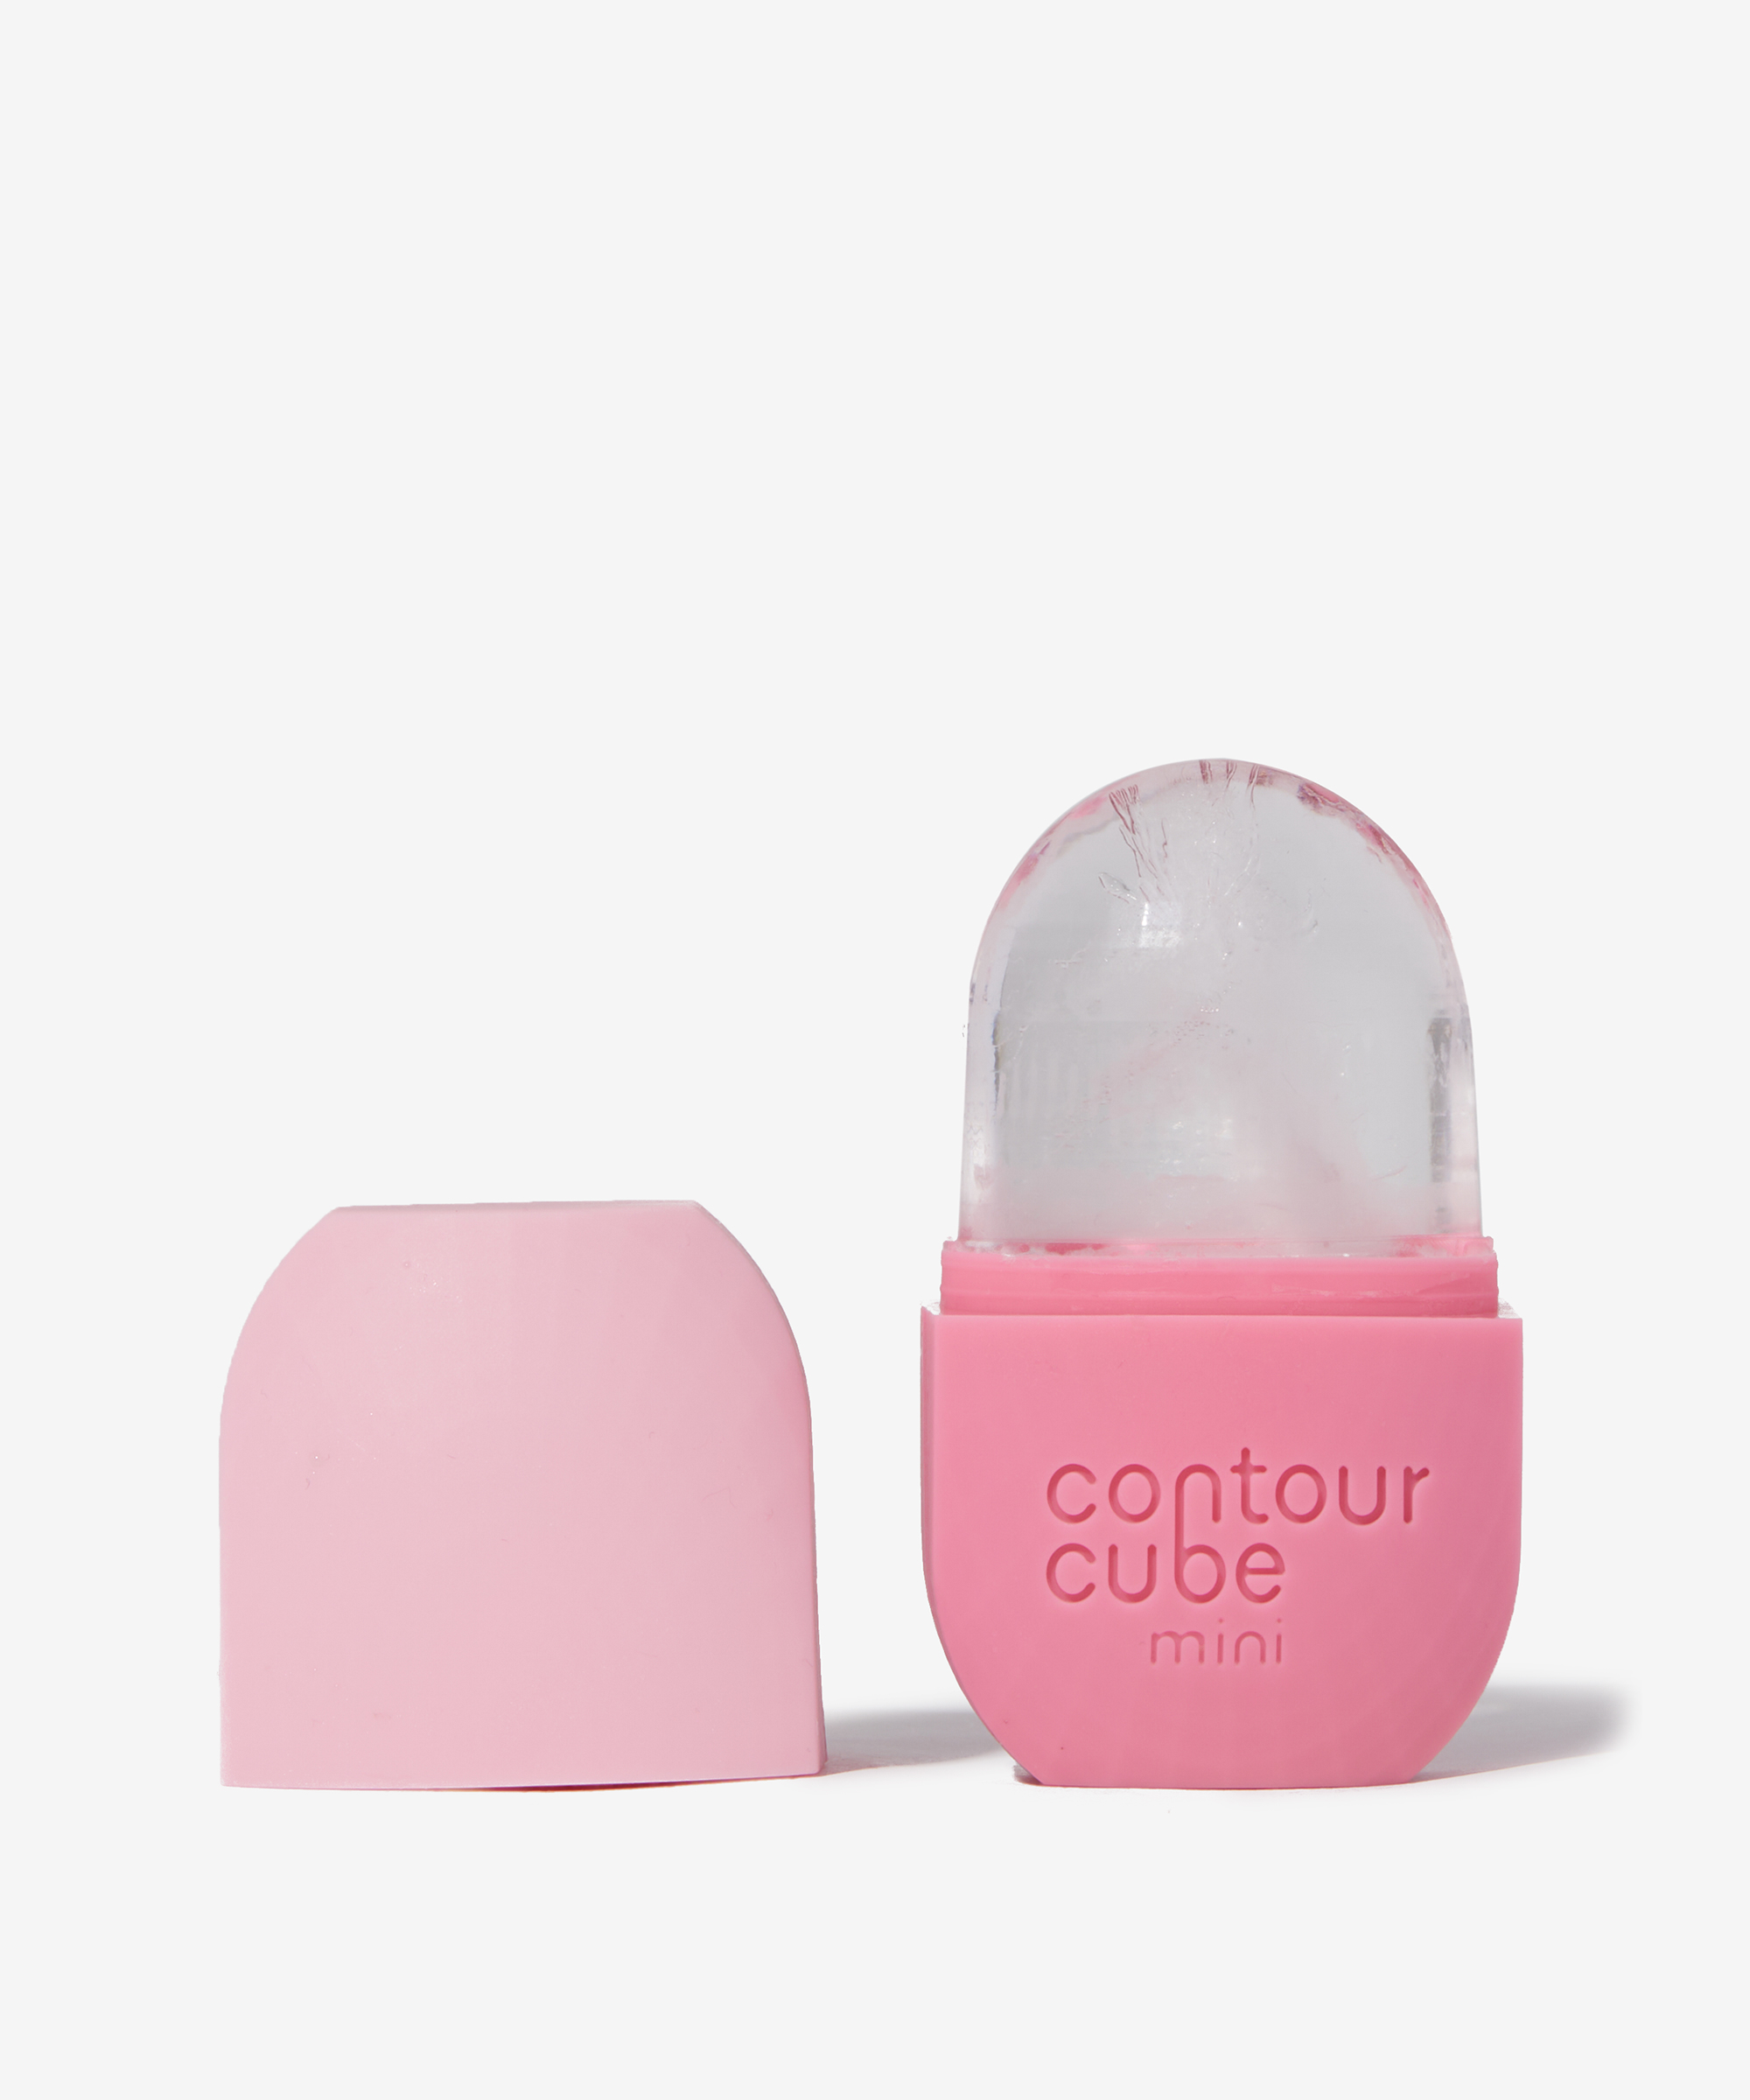 Original Pink Contour Cube